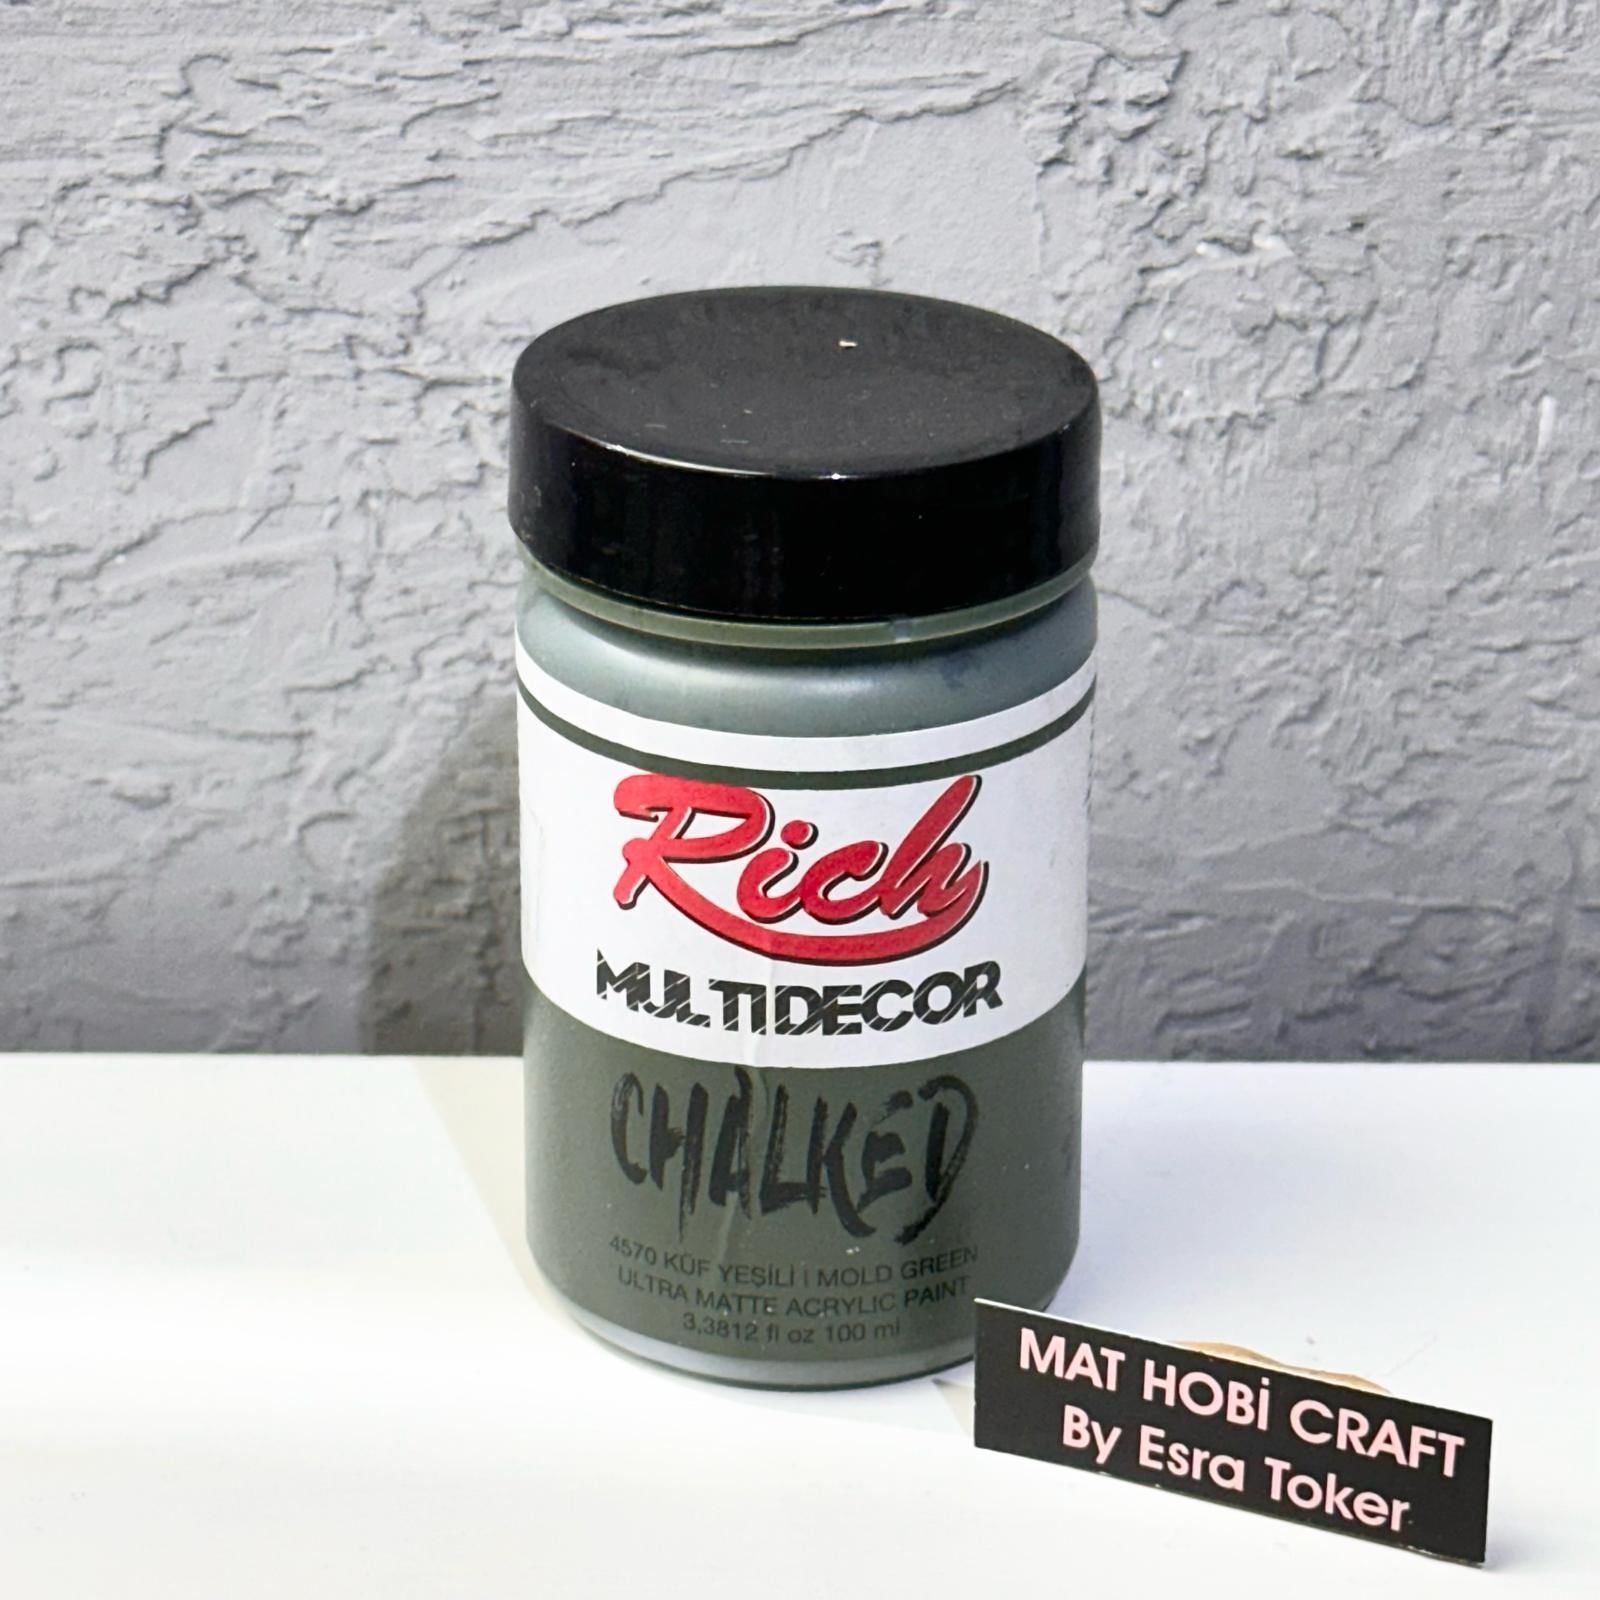 Multidecor Chalked - 4570 Küf Yeşili  100 ml